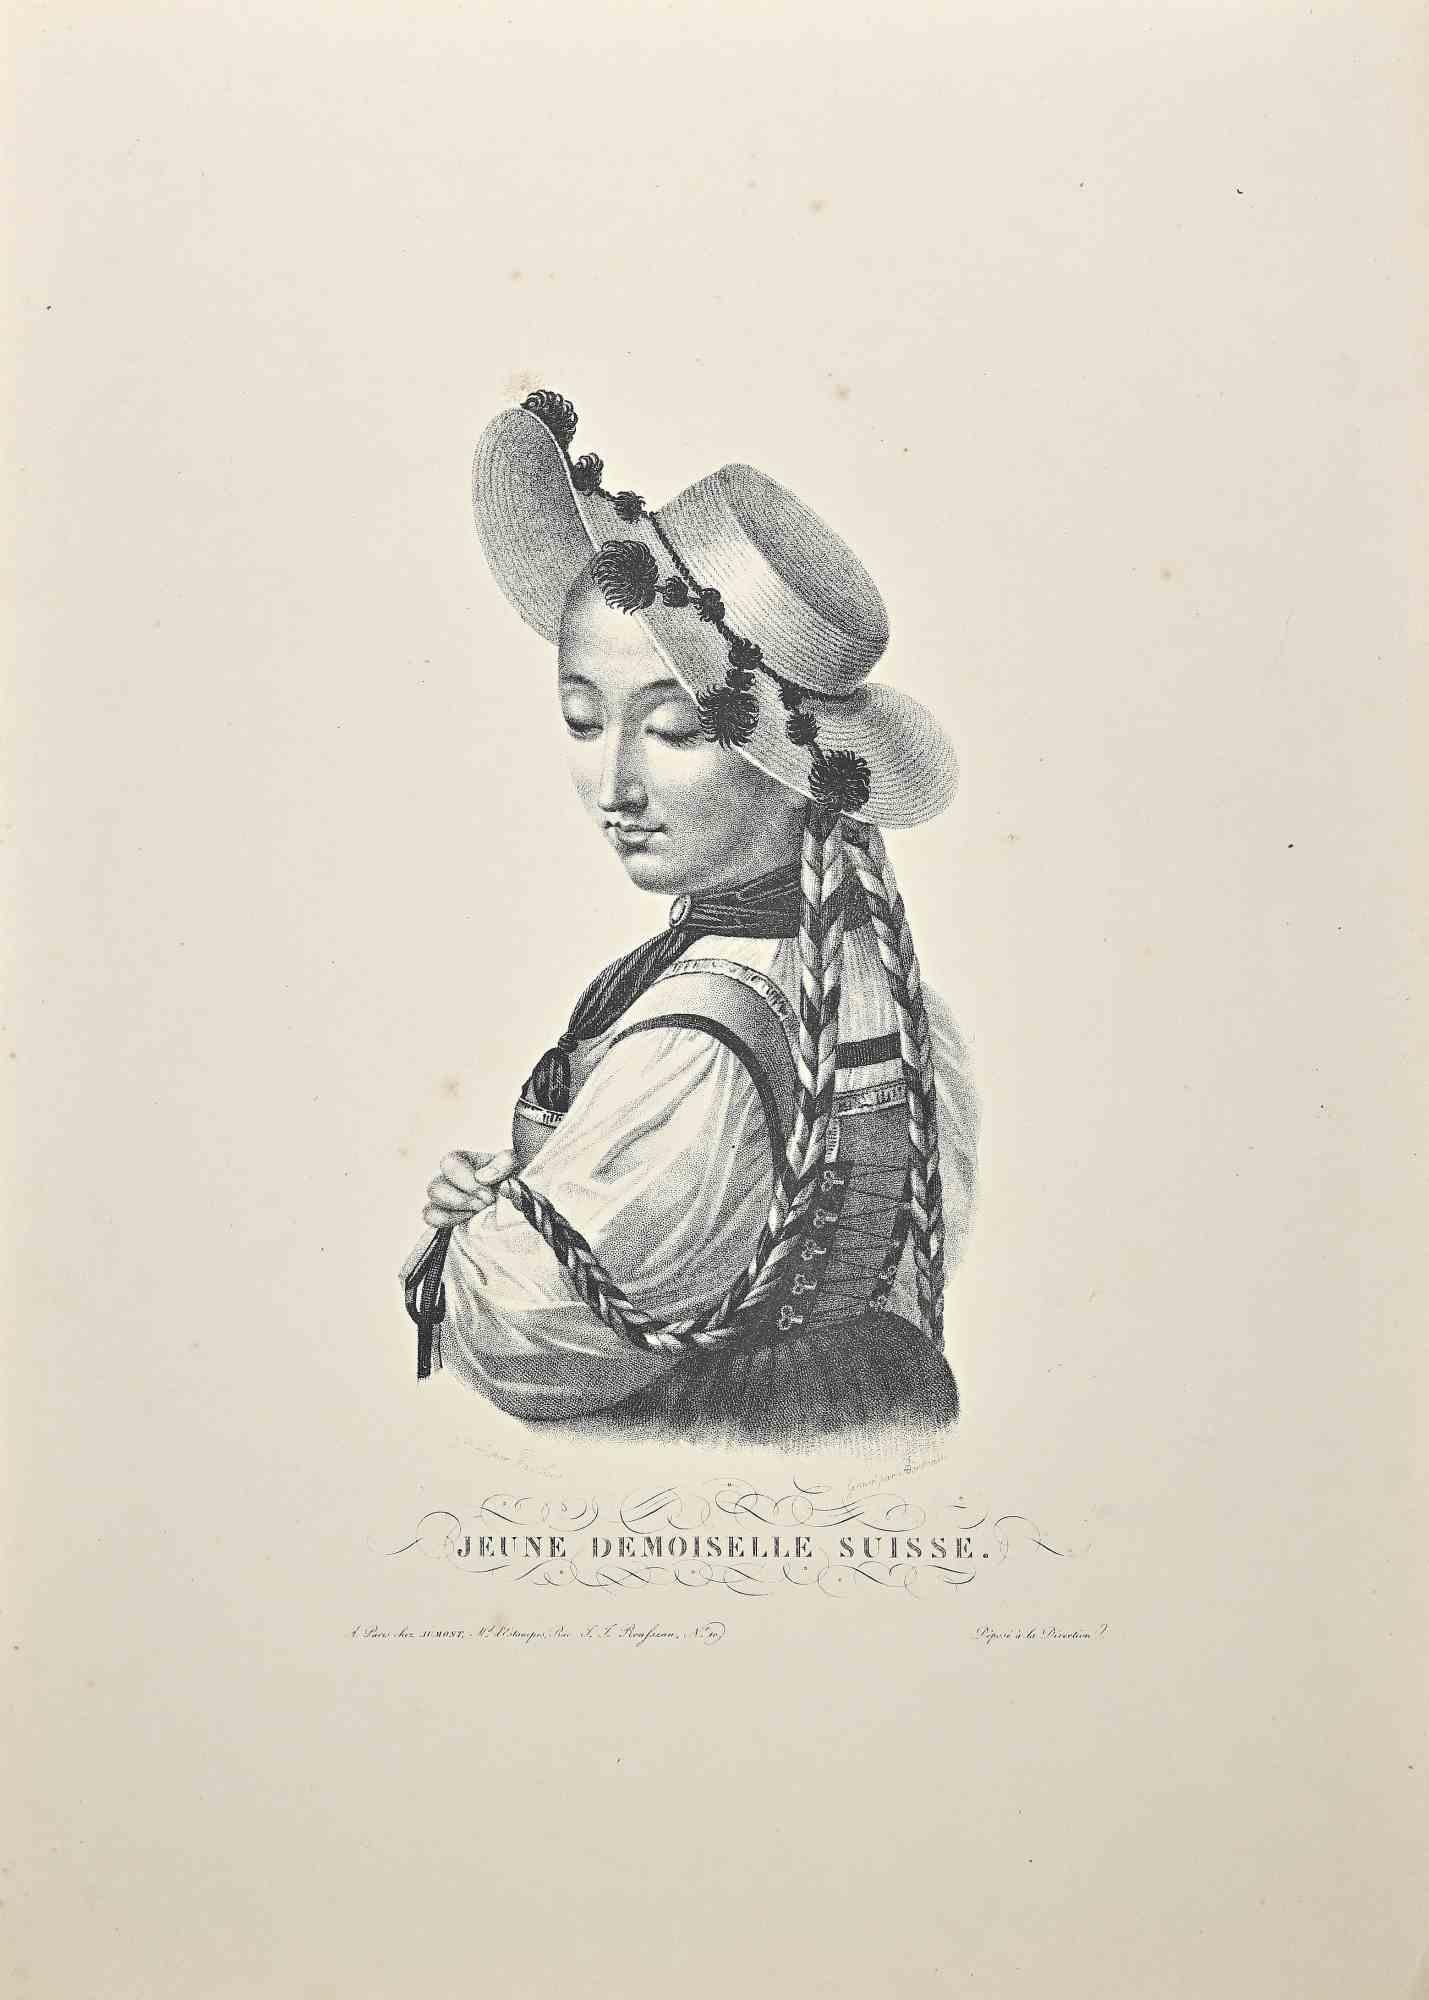 Noel François Bertrand Portrait Print - Jeune Demoiselle Suisse - Etching by N.F. Bertrand - 19th Century